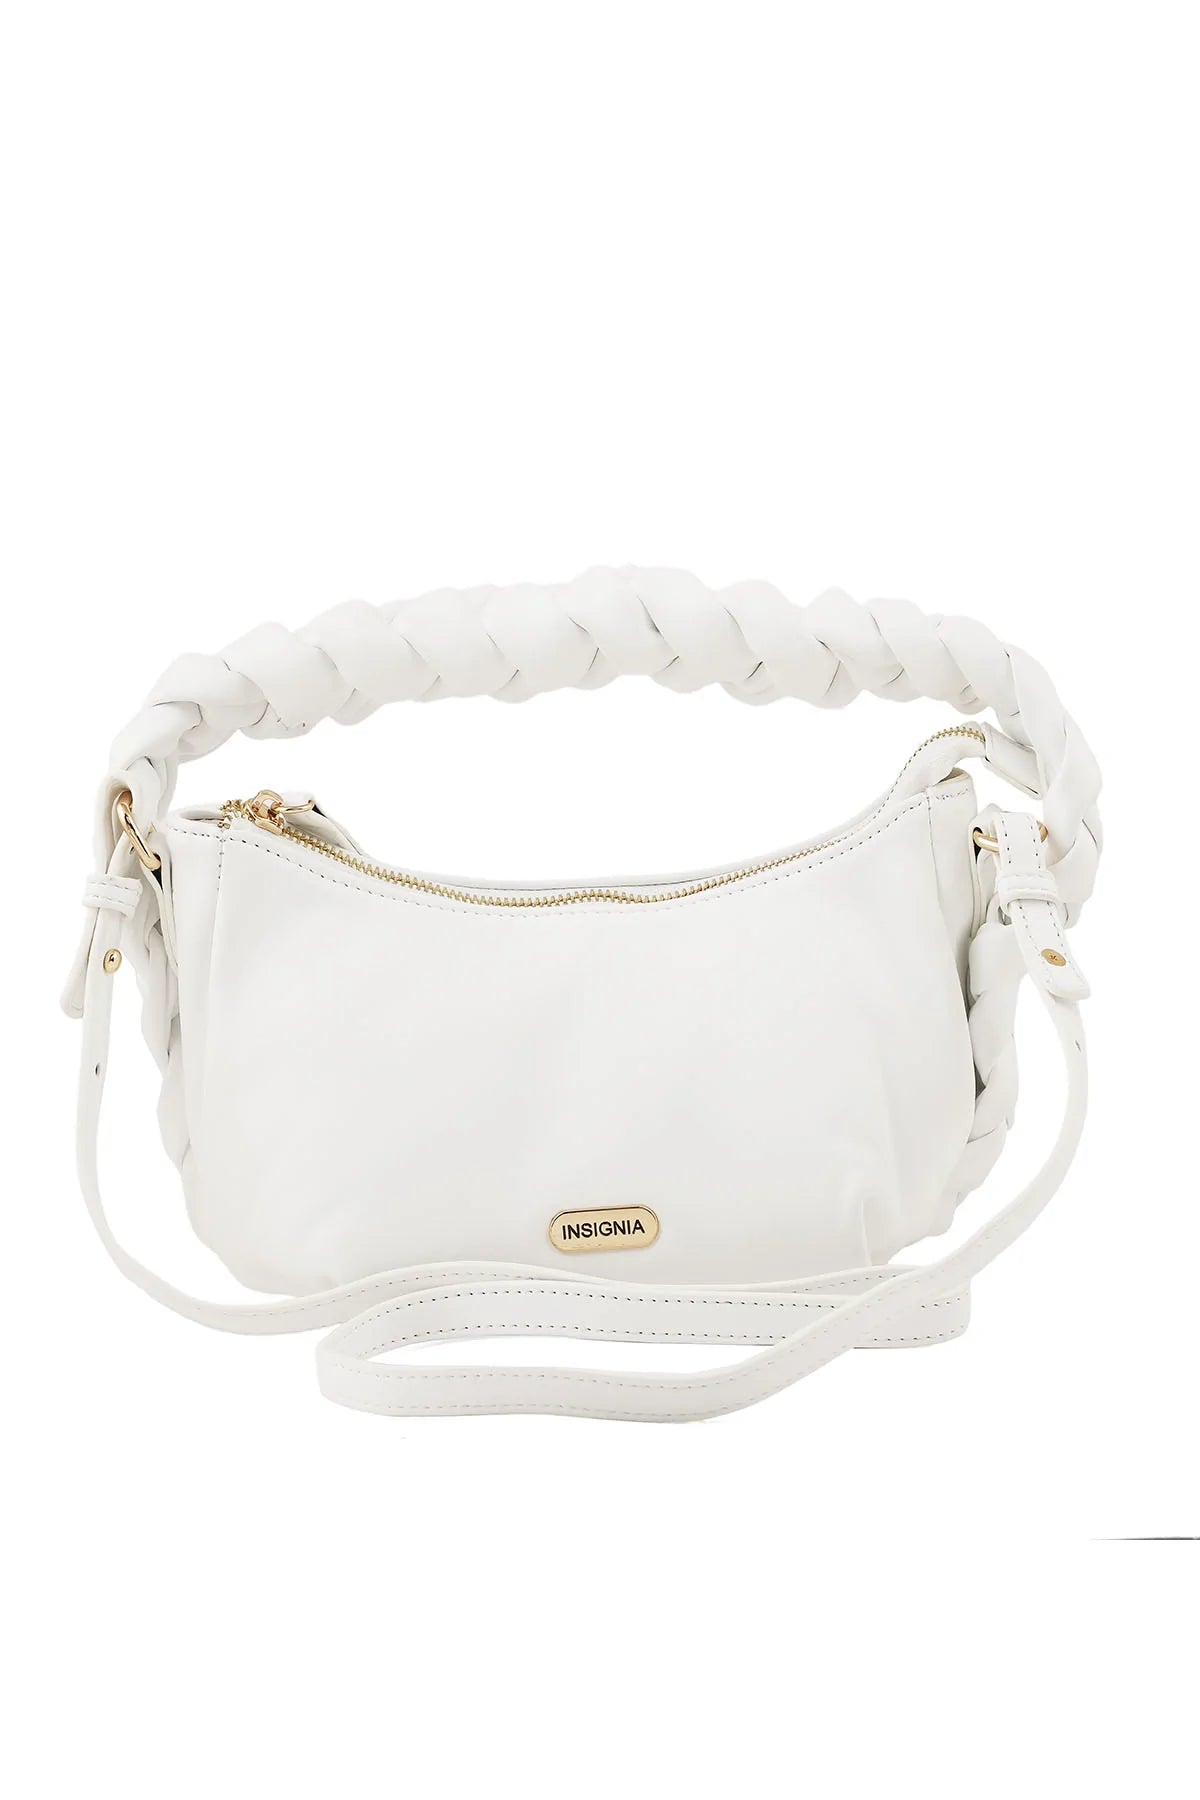 Hobo Hand Bags B15023-White